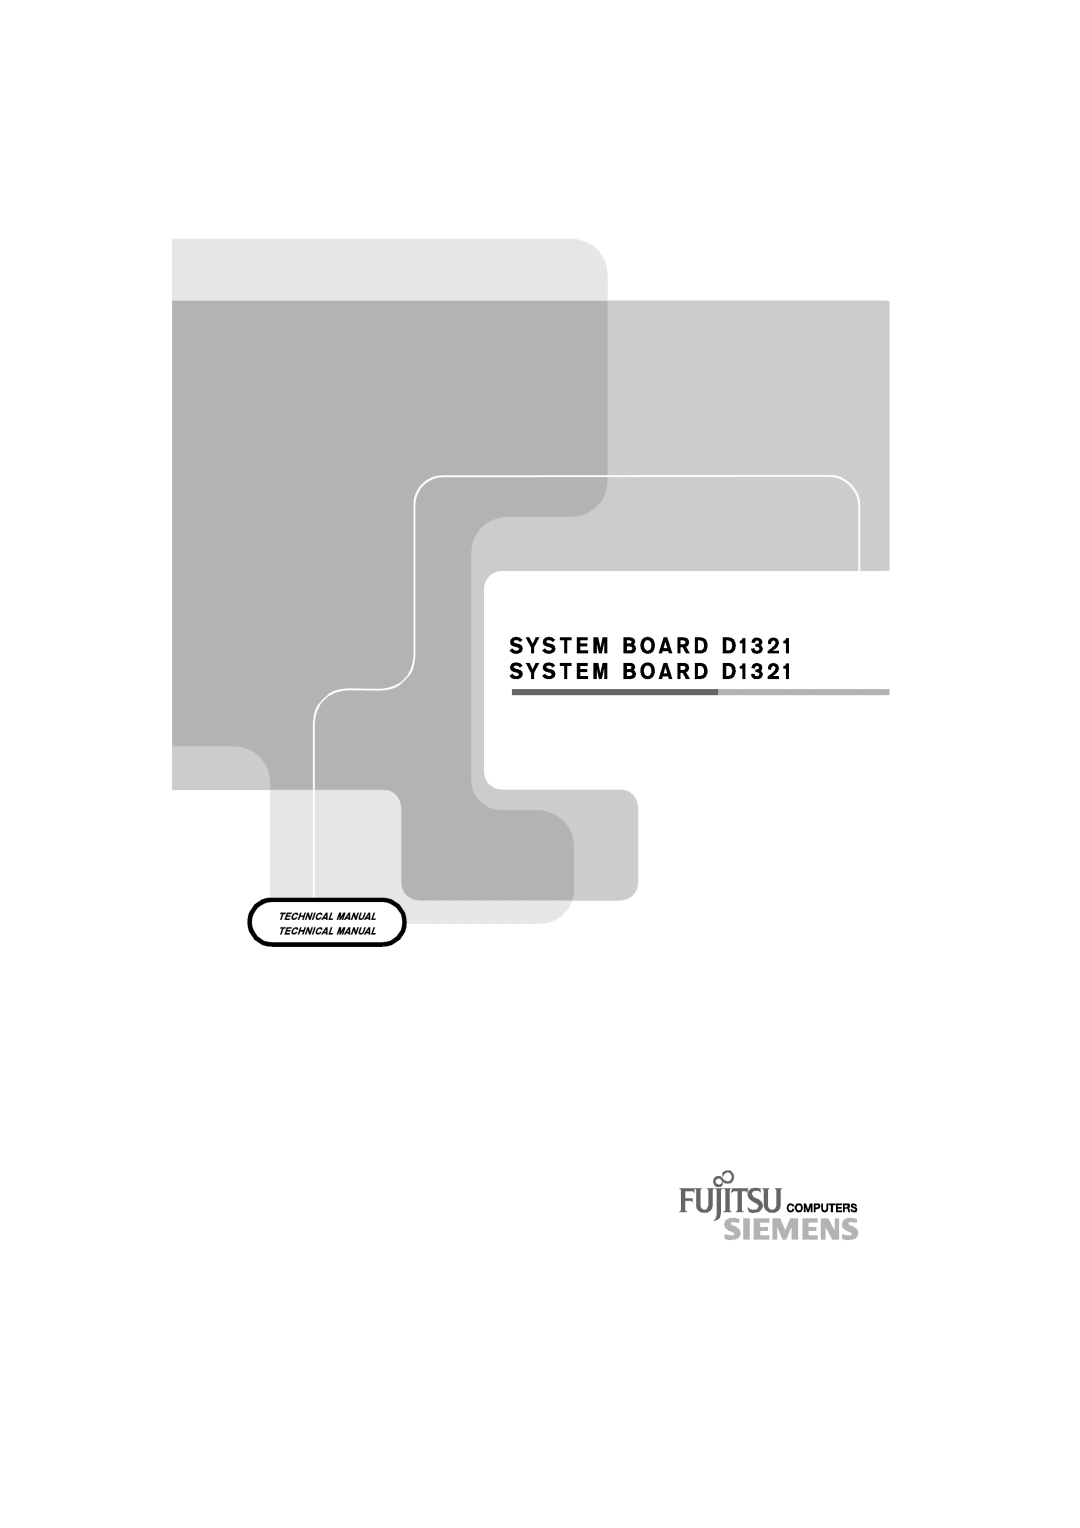 Fujitsu D1321 technical manual S Y S T E M B O A R D D 1 3 2 S Y S T E M B O A R D D 1, Technical Manual Technical Manual 